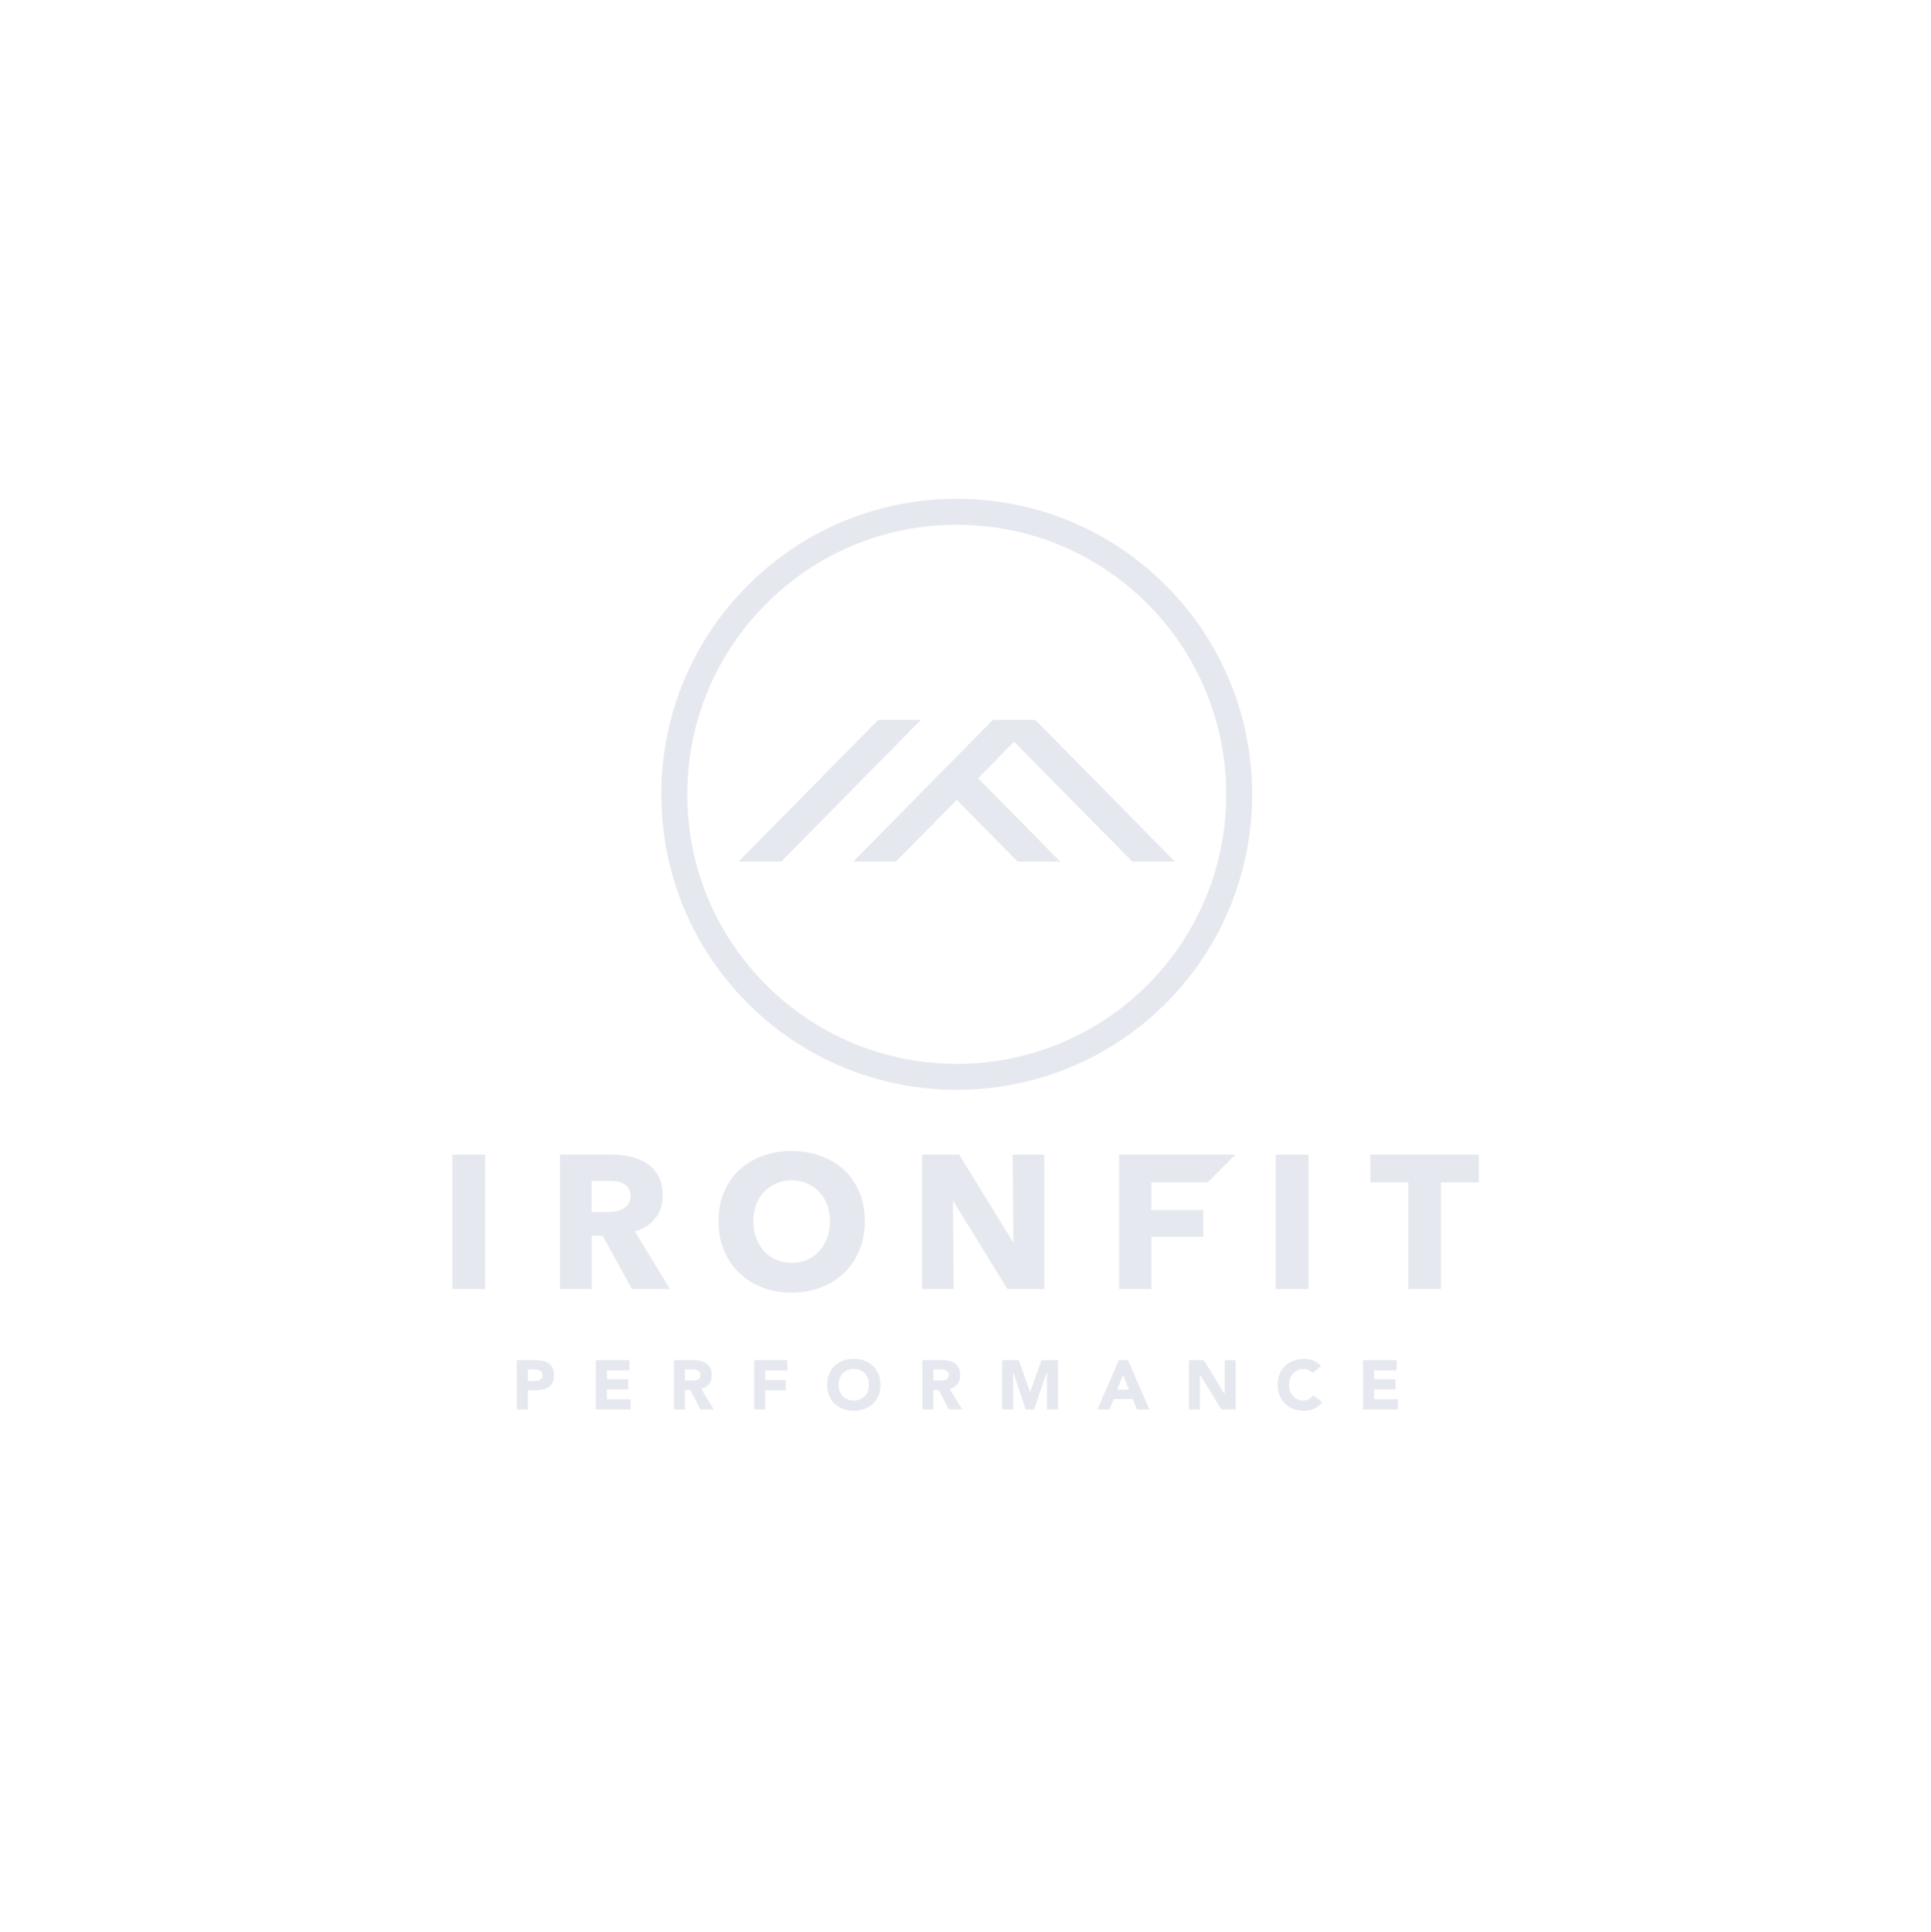 Iron Fit Performance